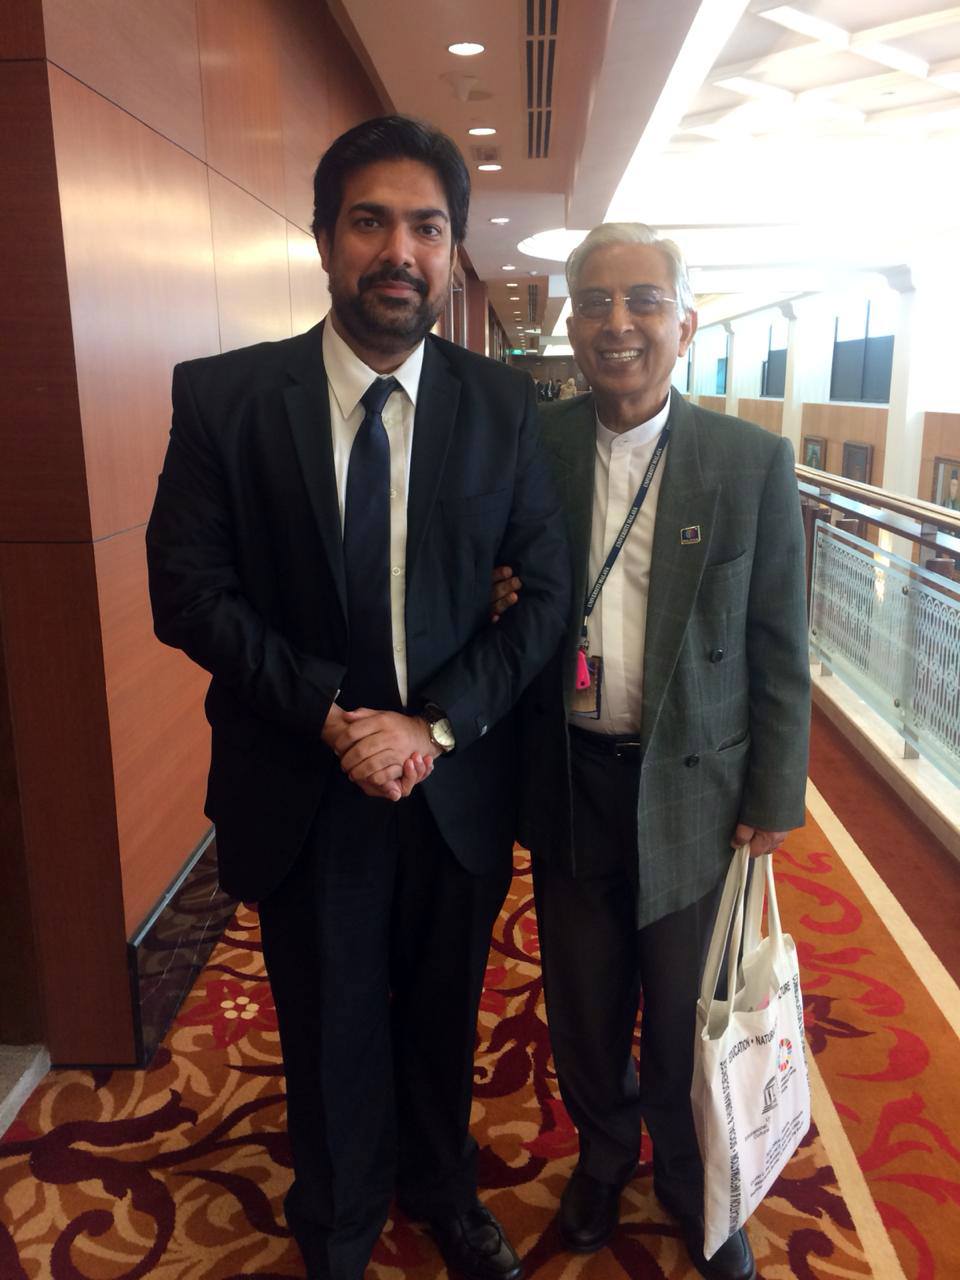 Meeting with Datuk Dr Shad Saleem Faruqi